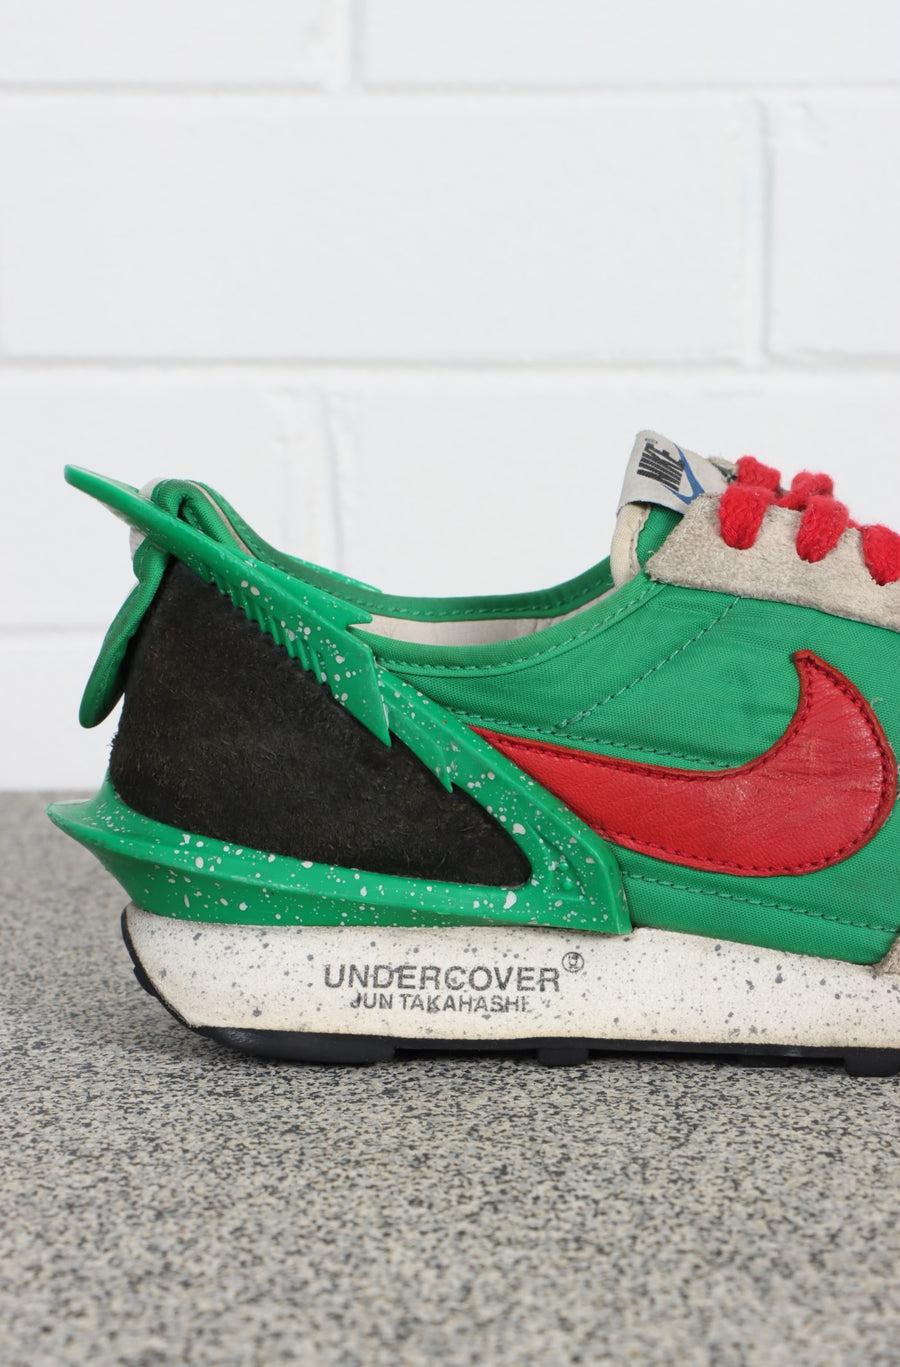 NIKE Undercover Daybreak 'Lucky Green' Sneakers (11.5)